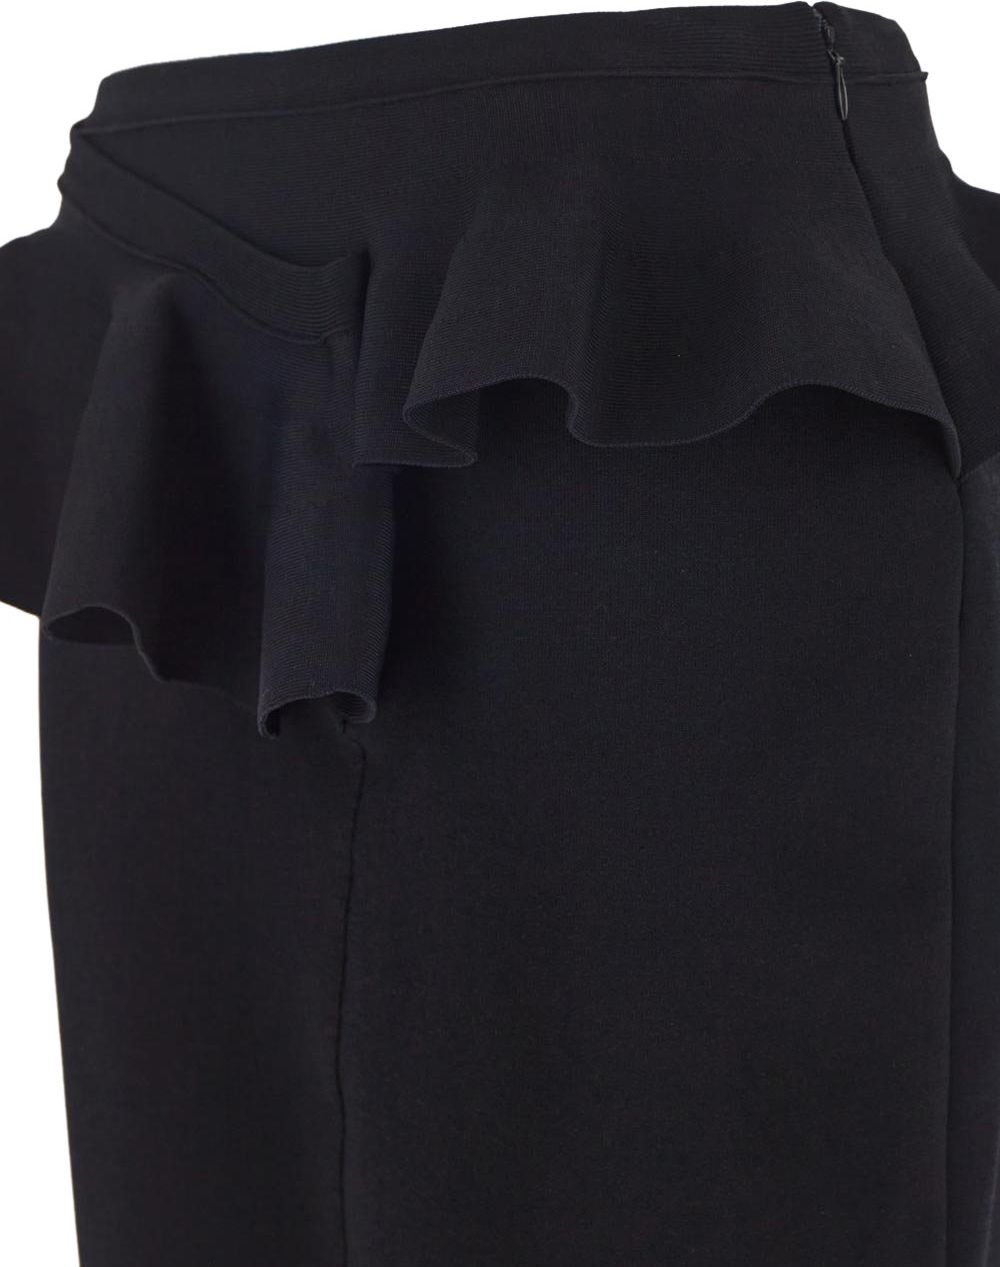 Alexander McQueen Skirts Black Zwart